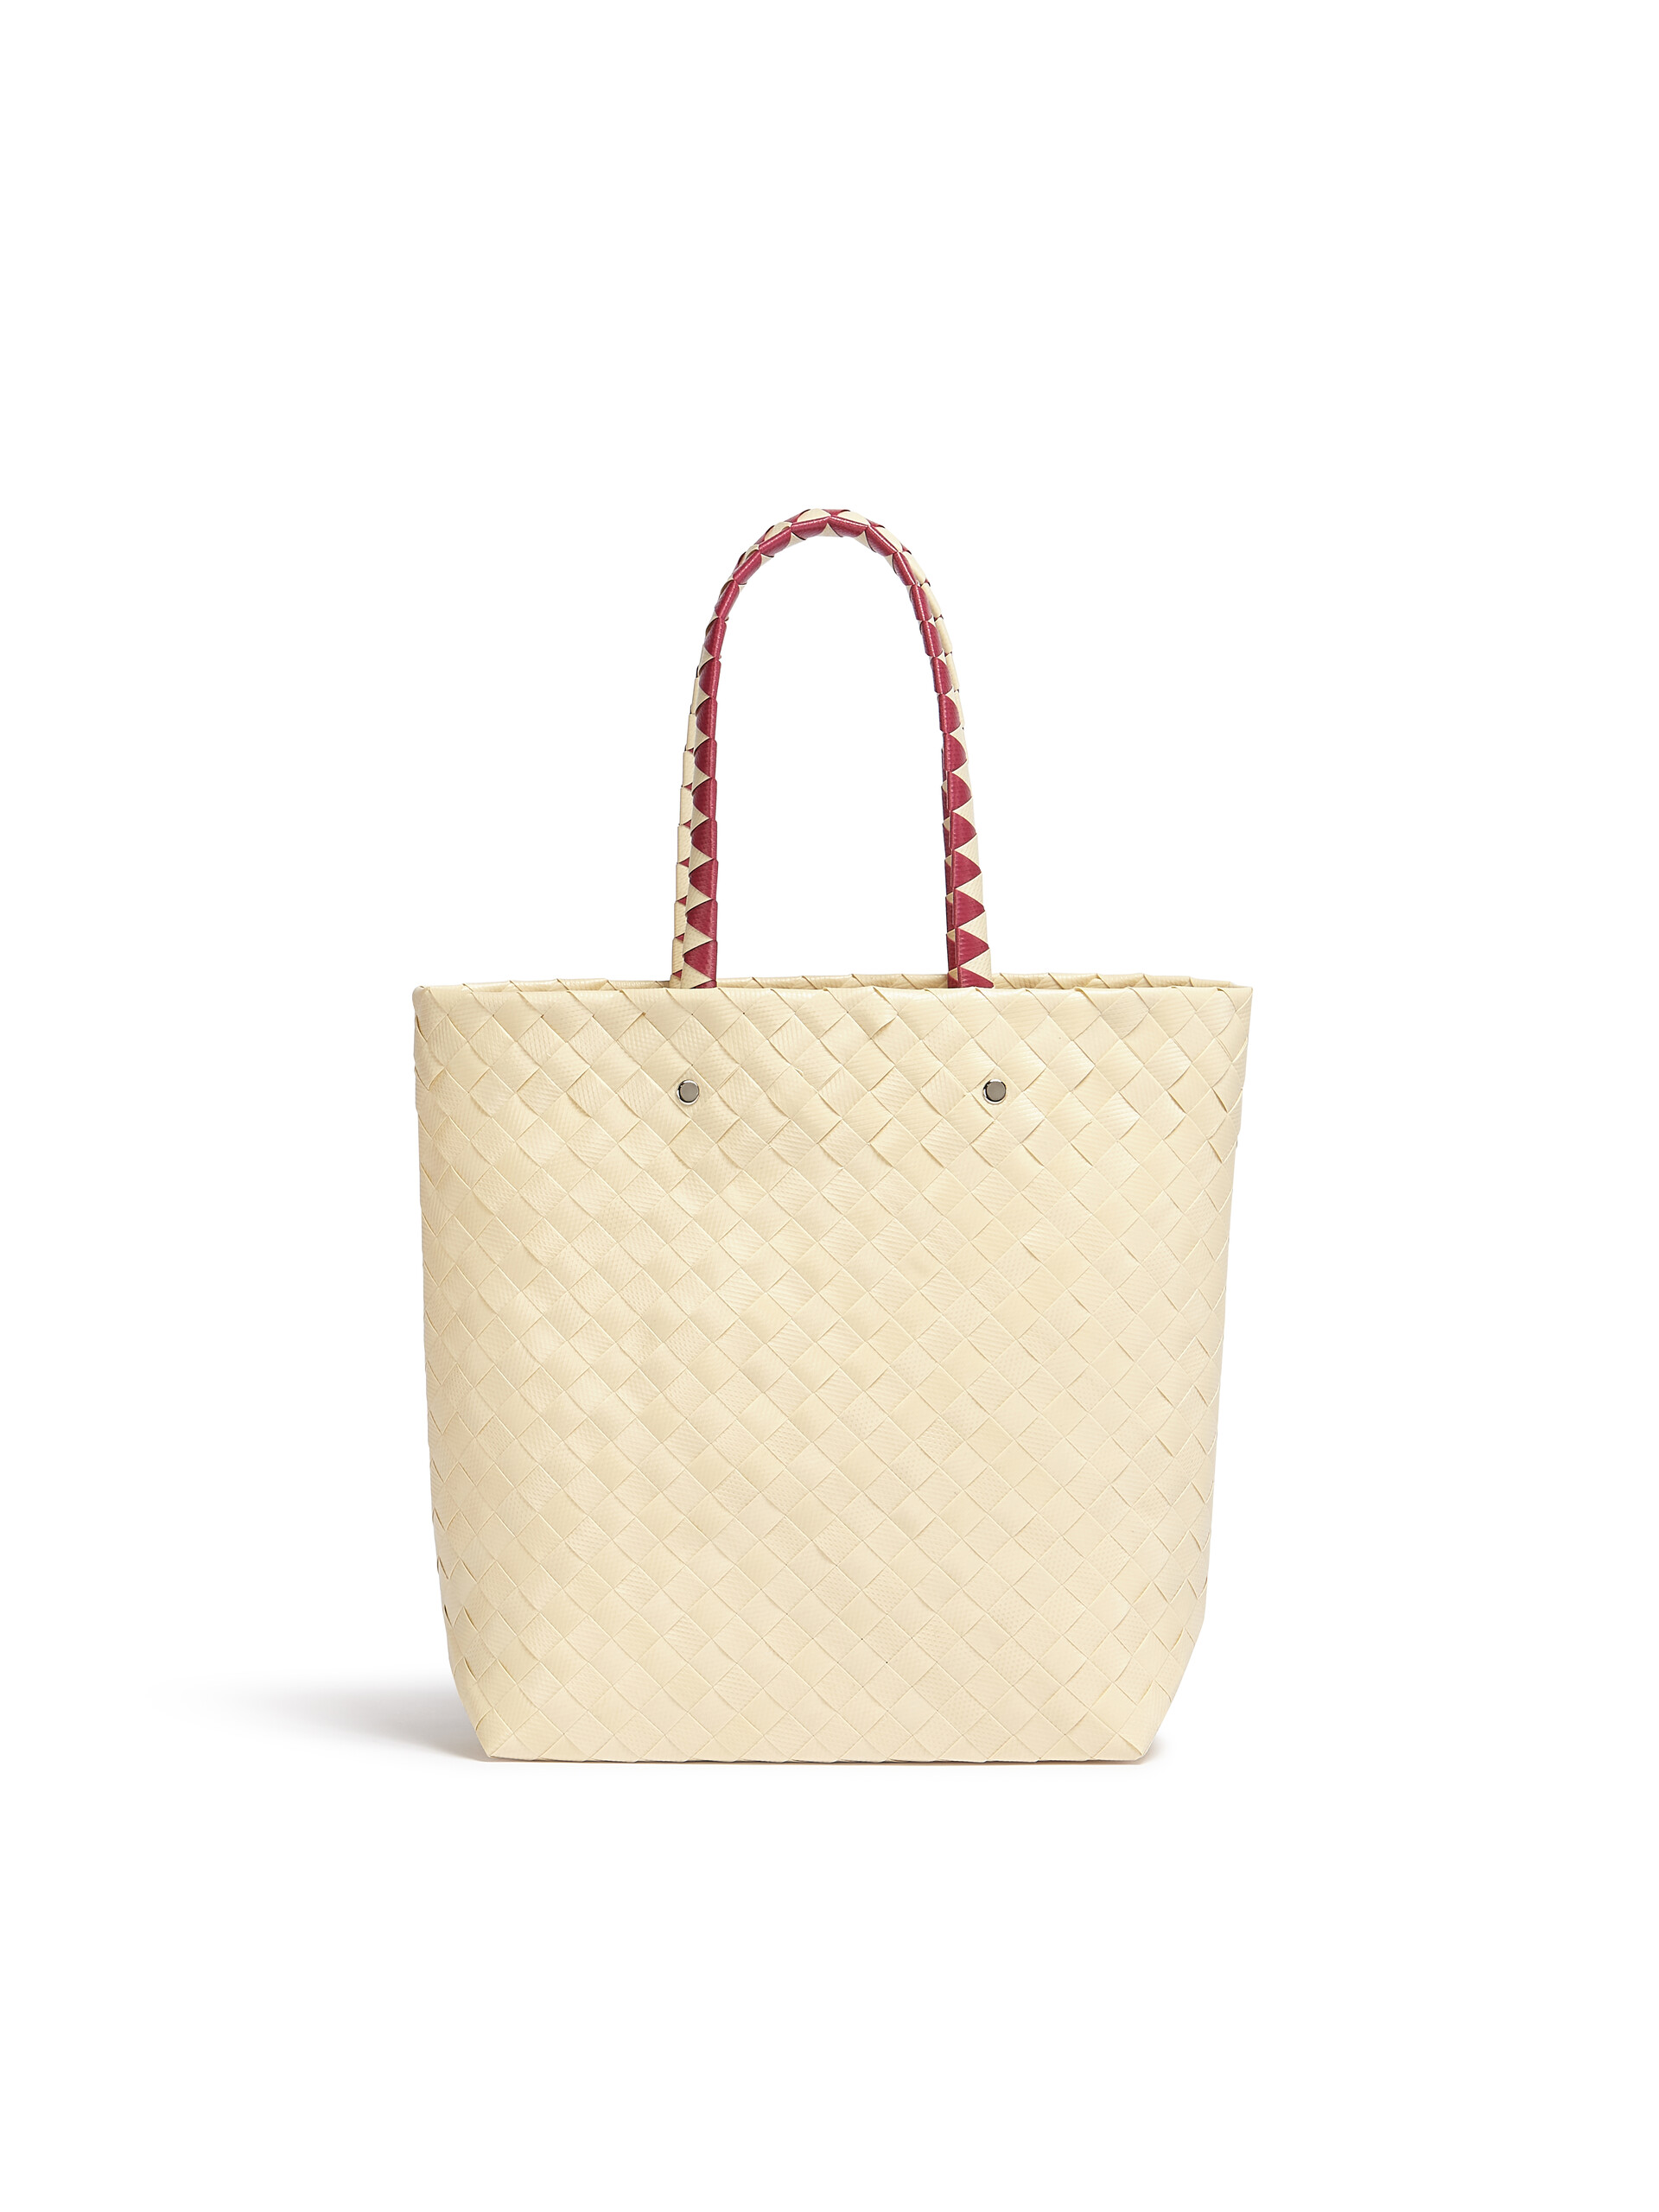 MARNI MARKET BORA small bag in white flower motif - Shopping Bags - Image 3